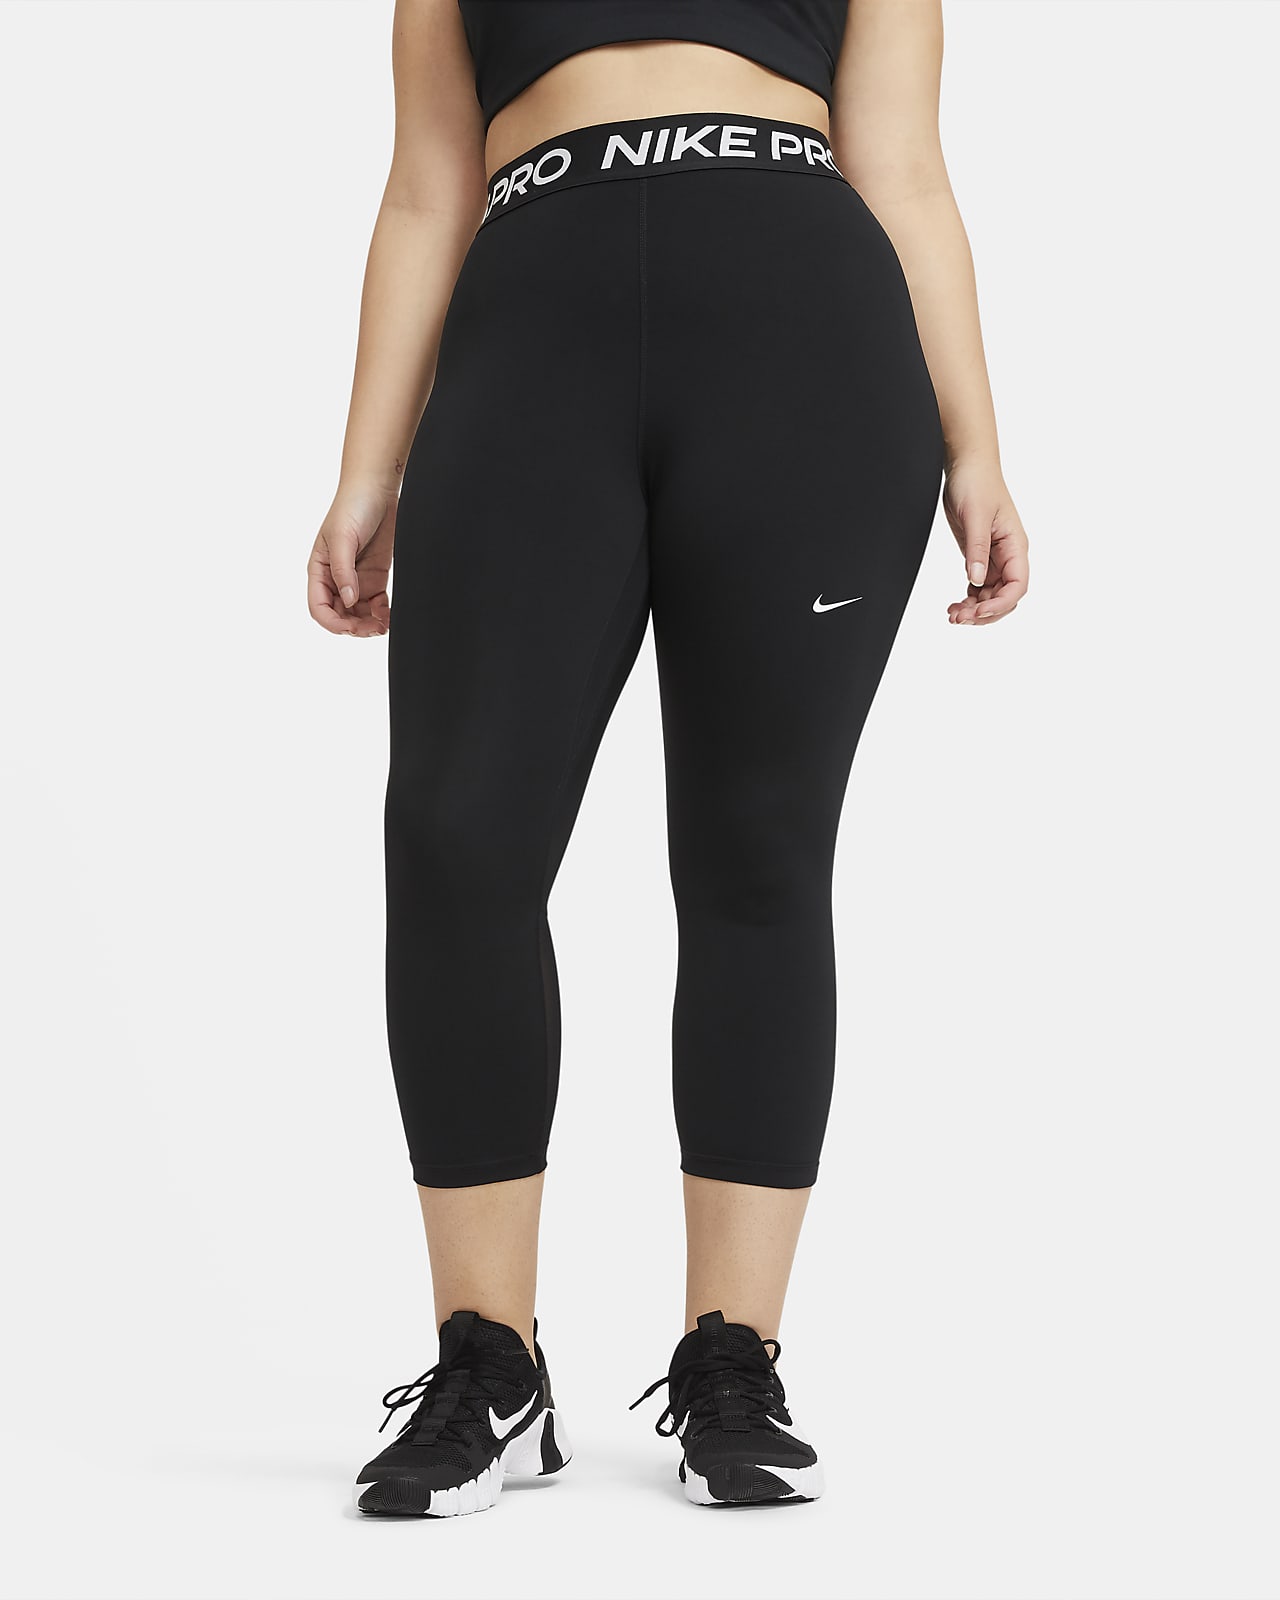 Nike Women's Leggings (Plus Size). Nike LU